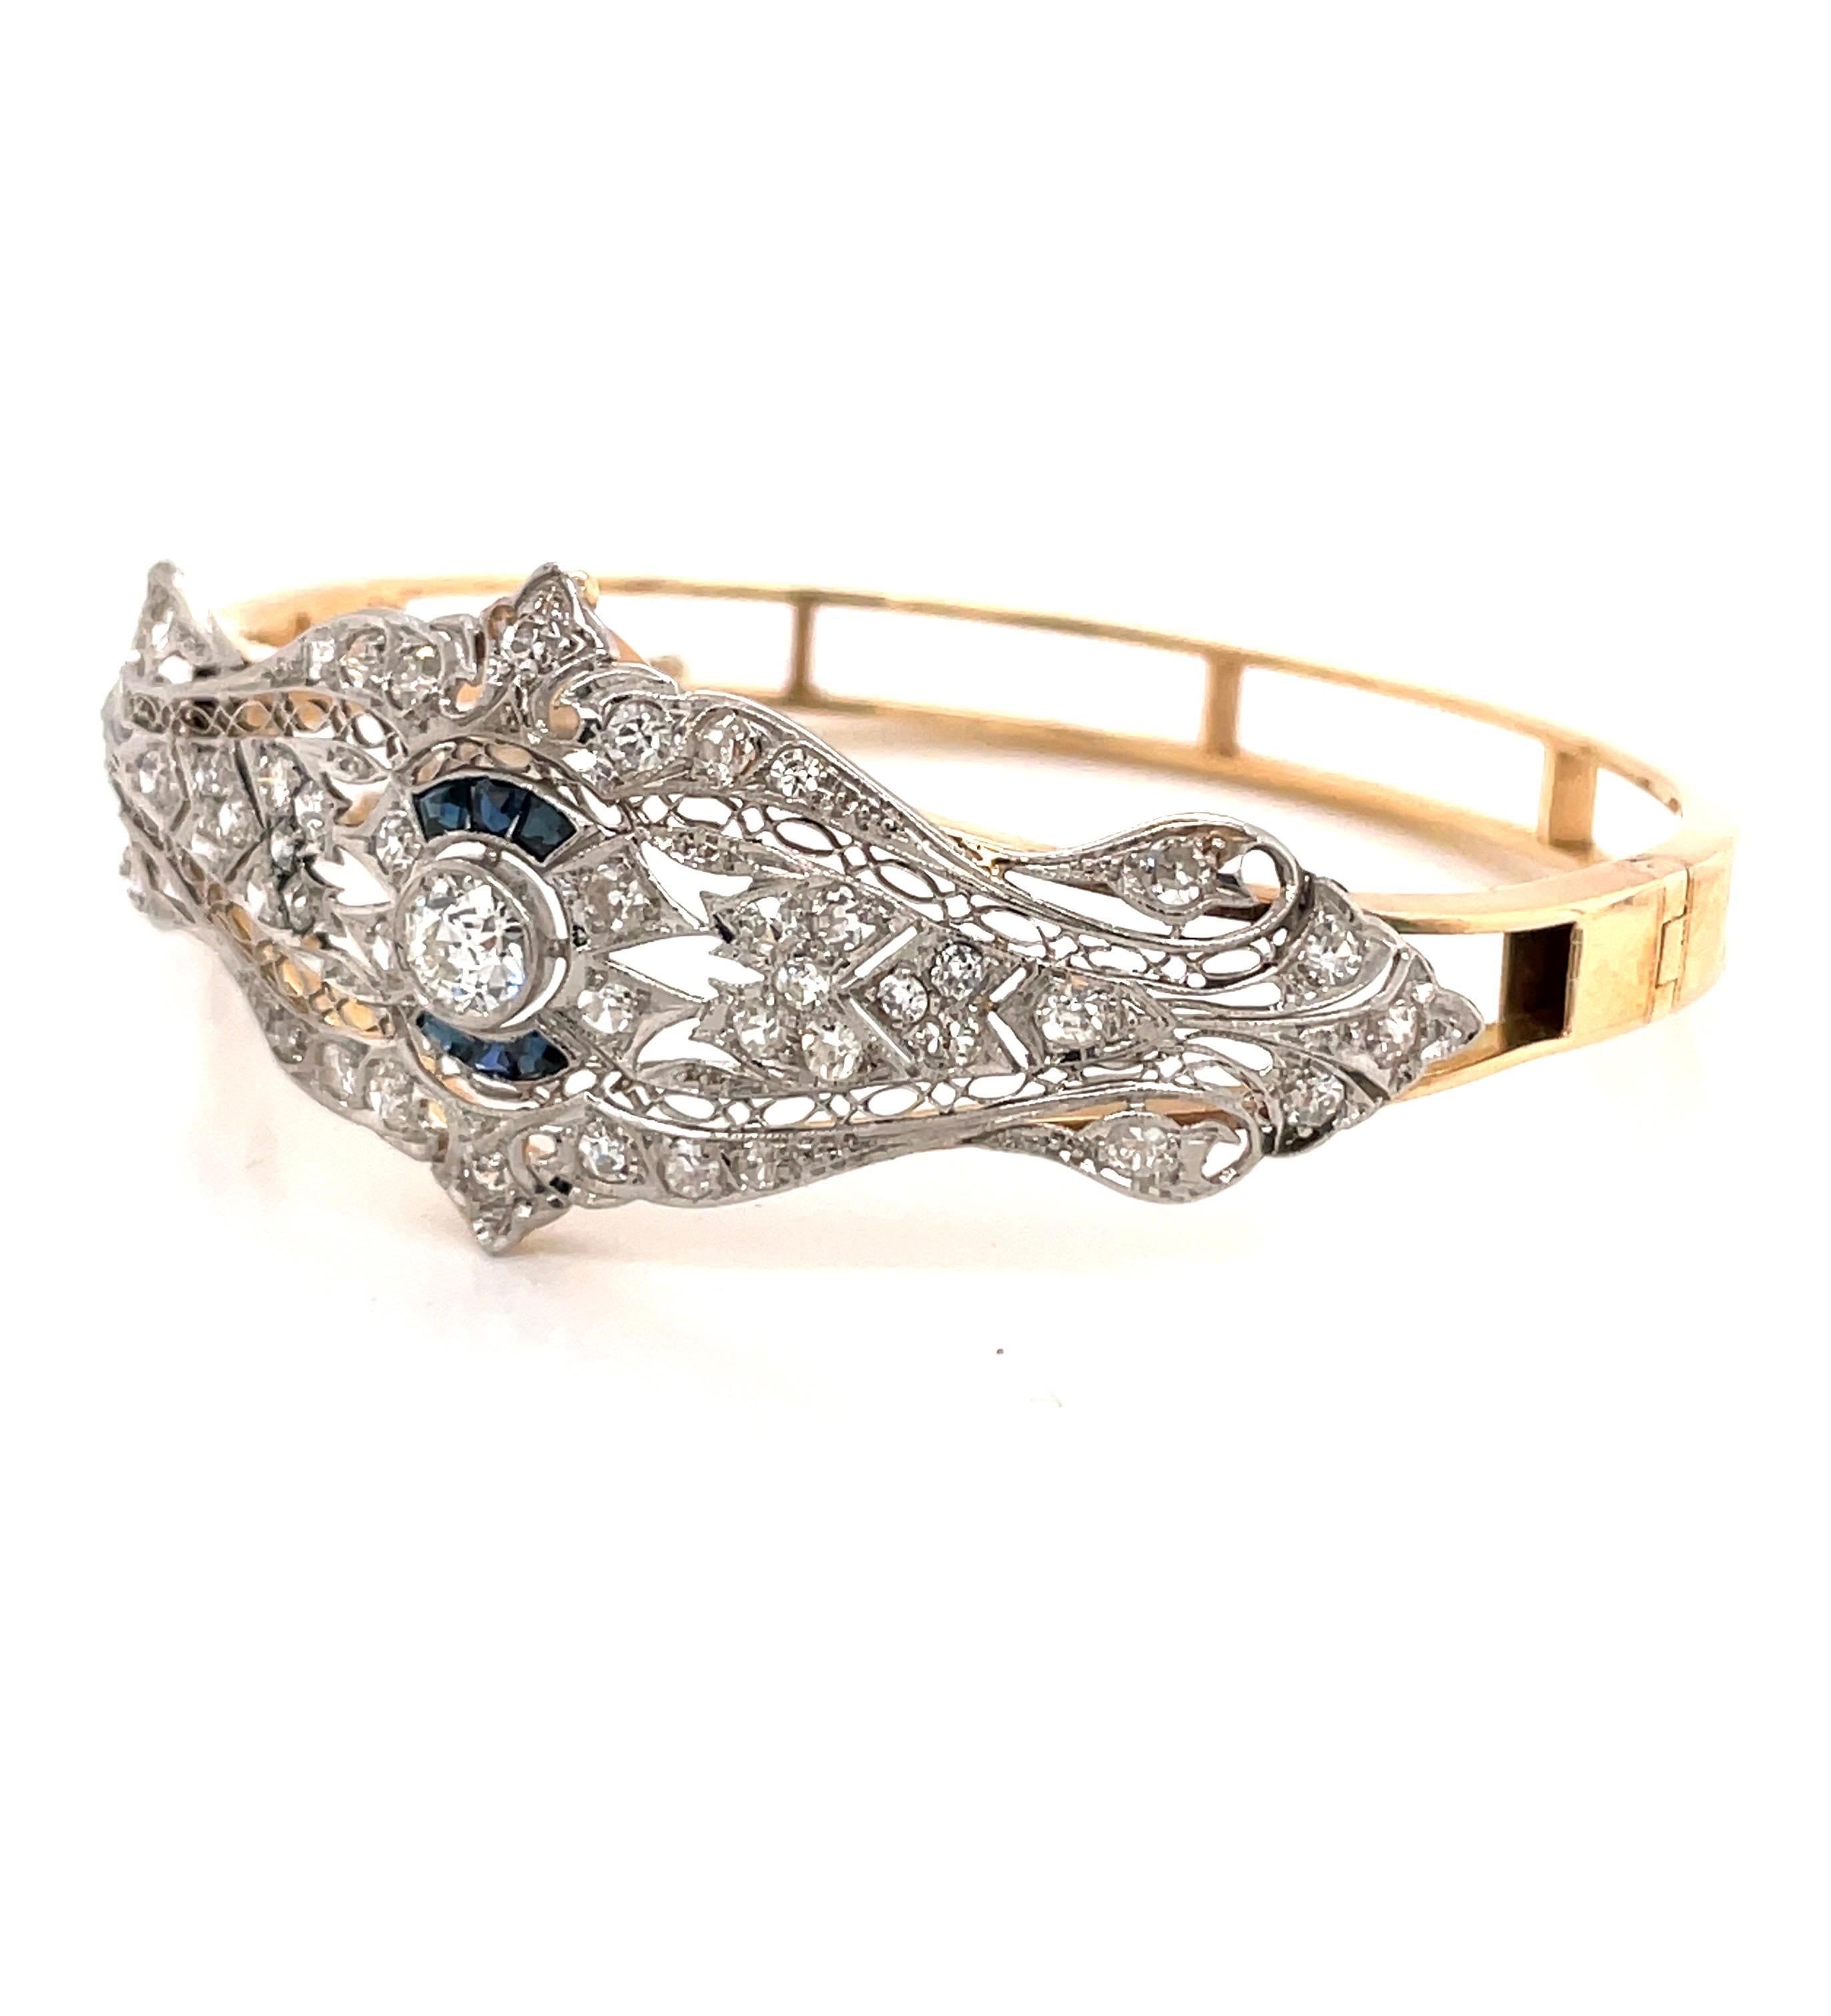 Old European Cut Vintage 1930's White Gold and Yellow Gold Diamond Bangle Bracelet